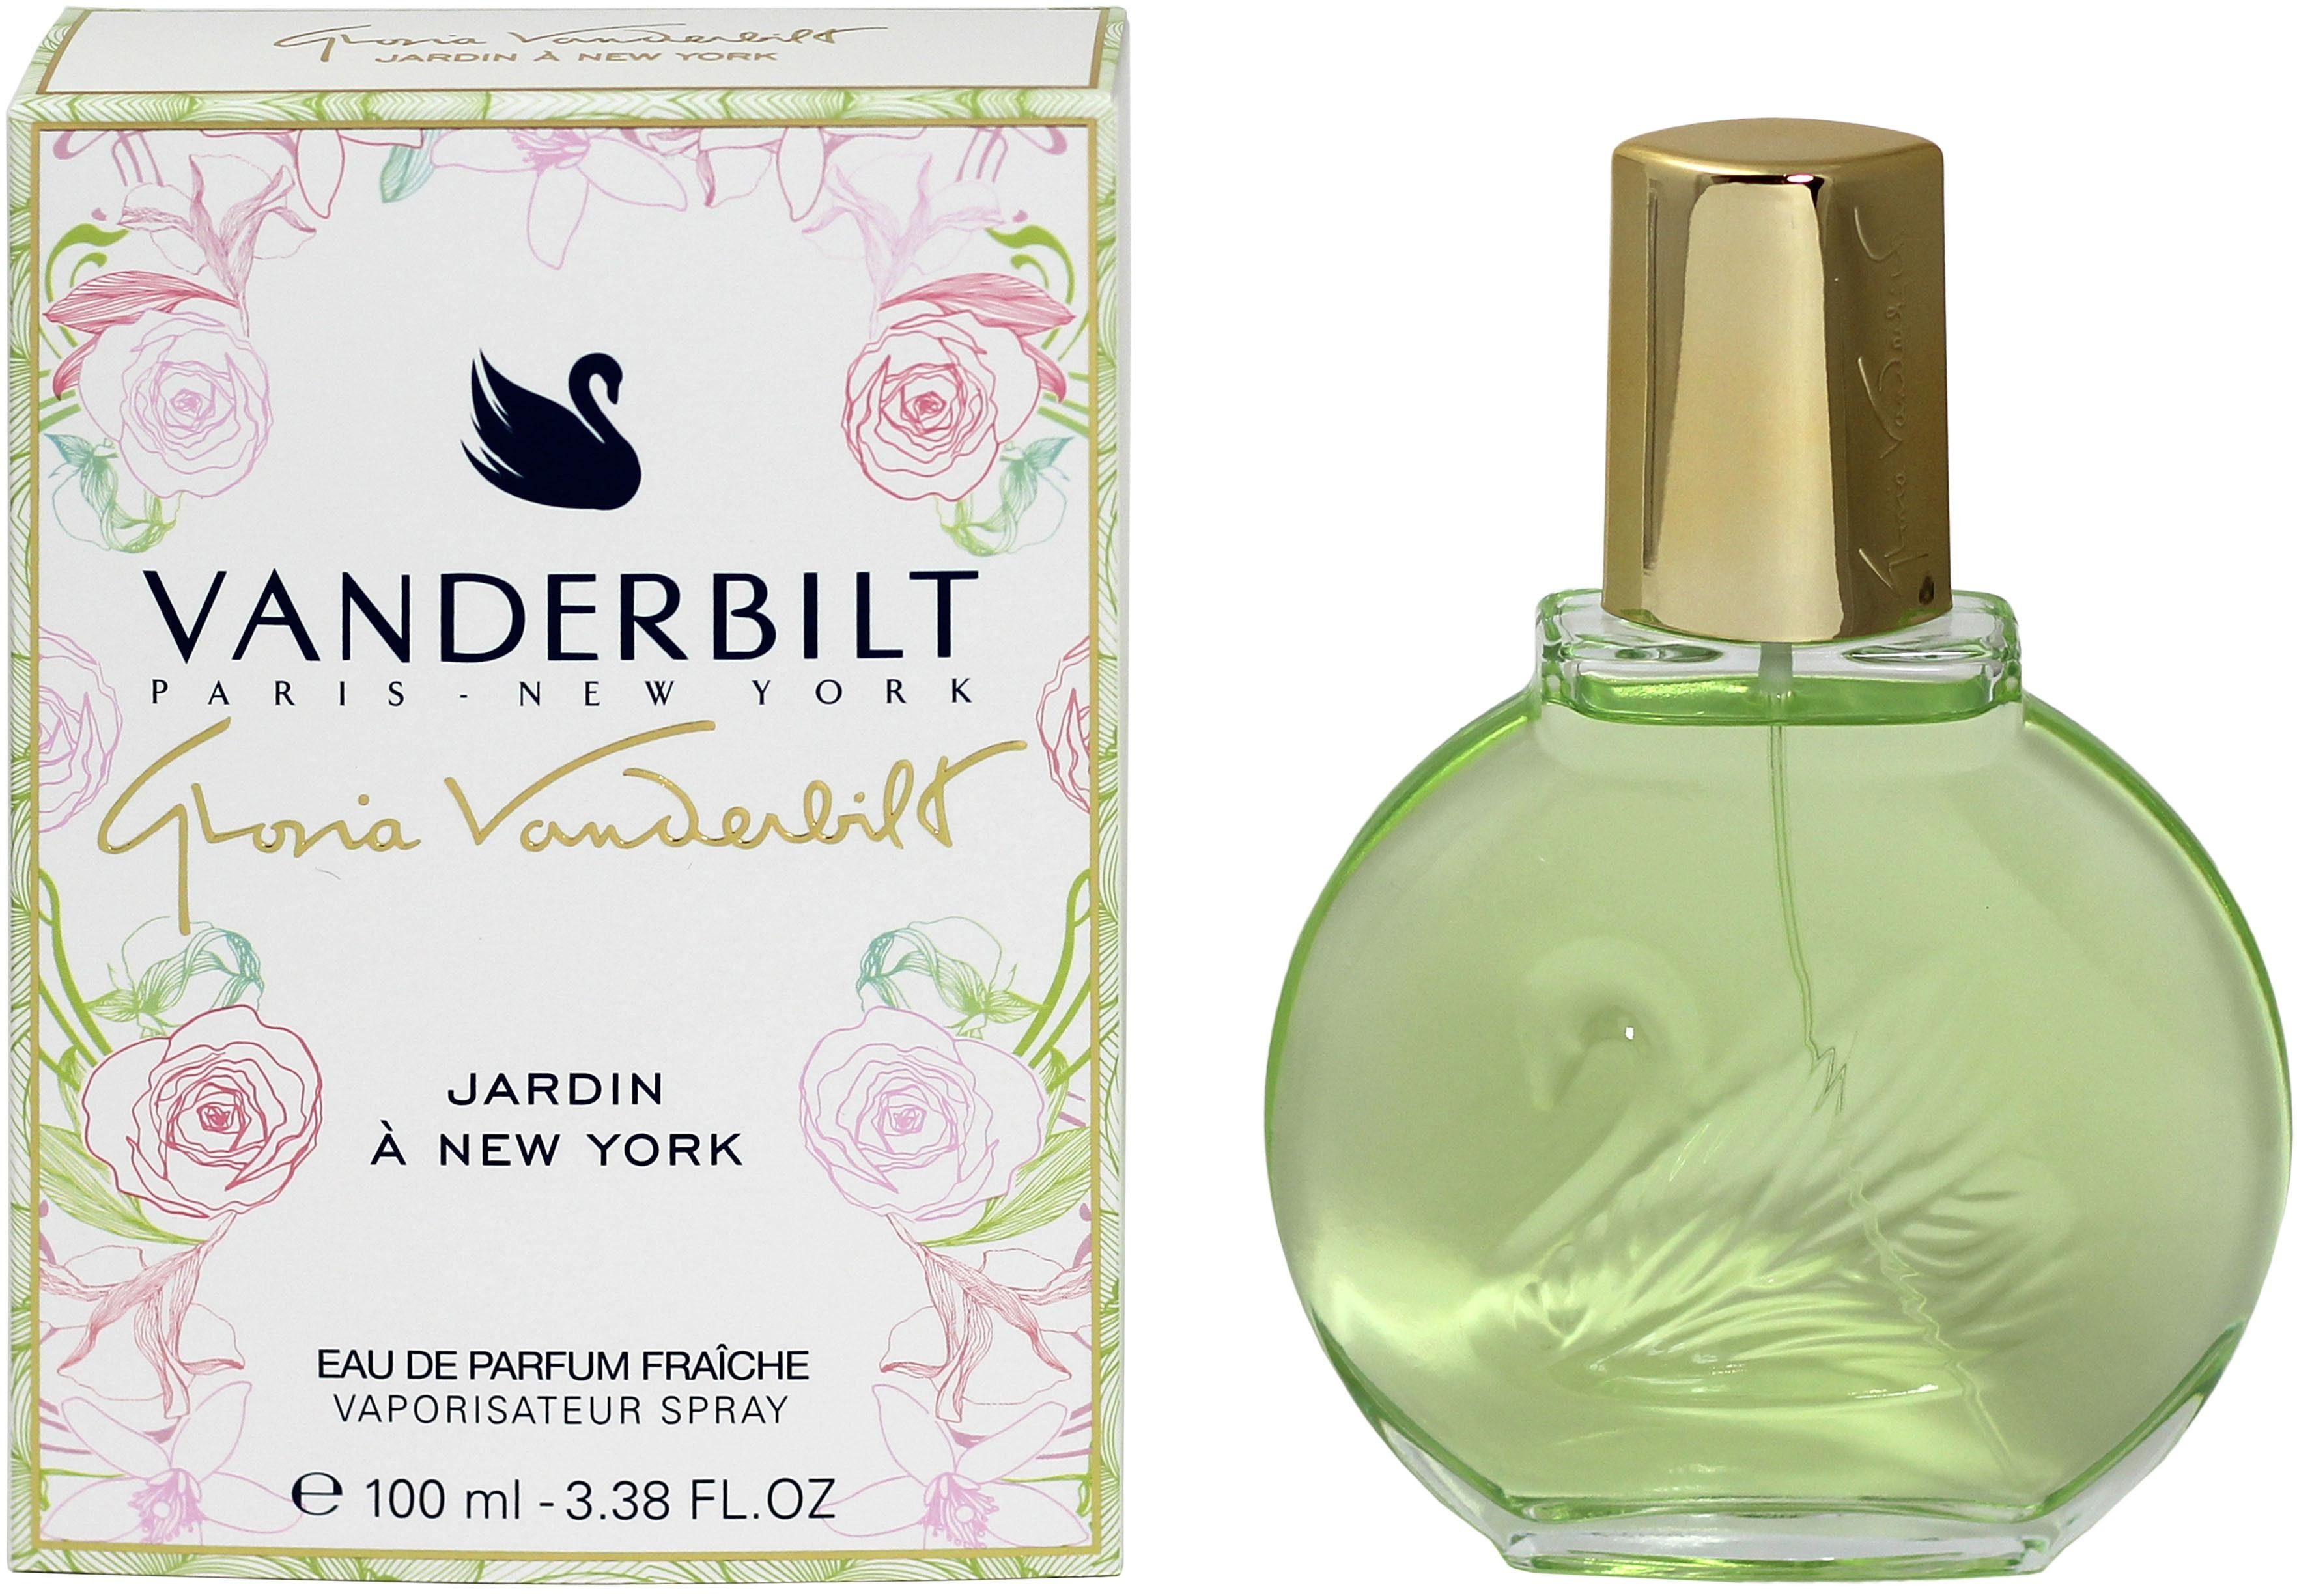 VANDERBILT Eau Vanderbilt New Jardin York á de Parfum